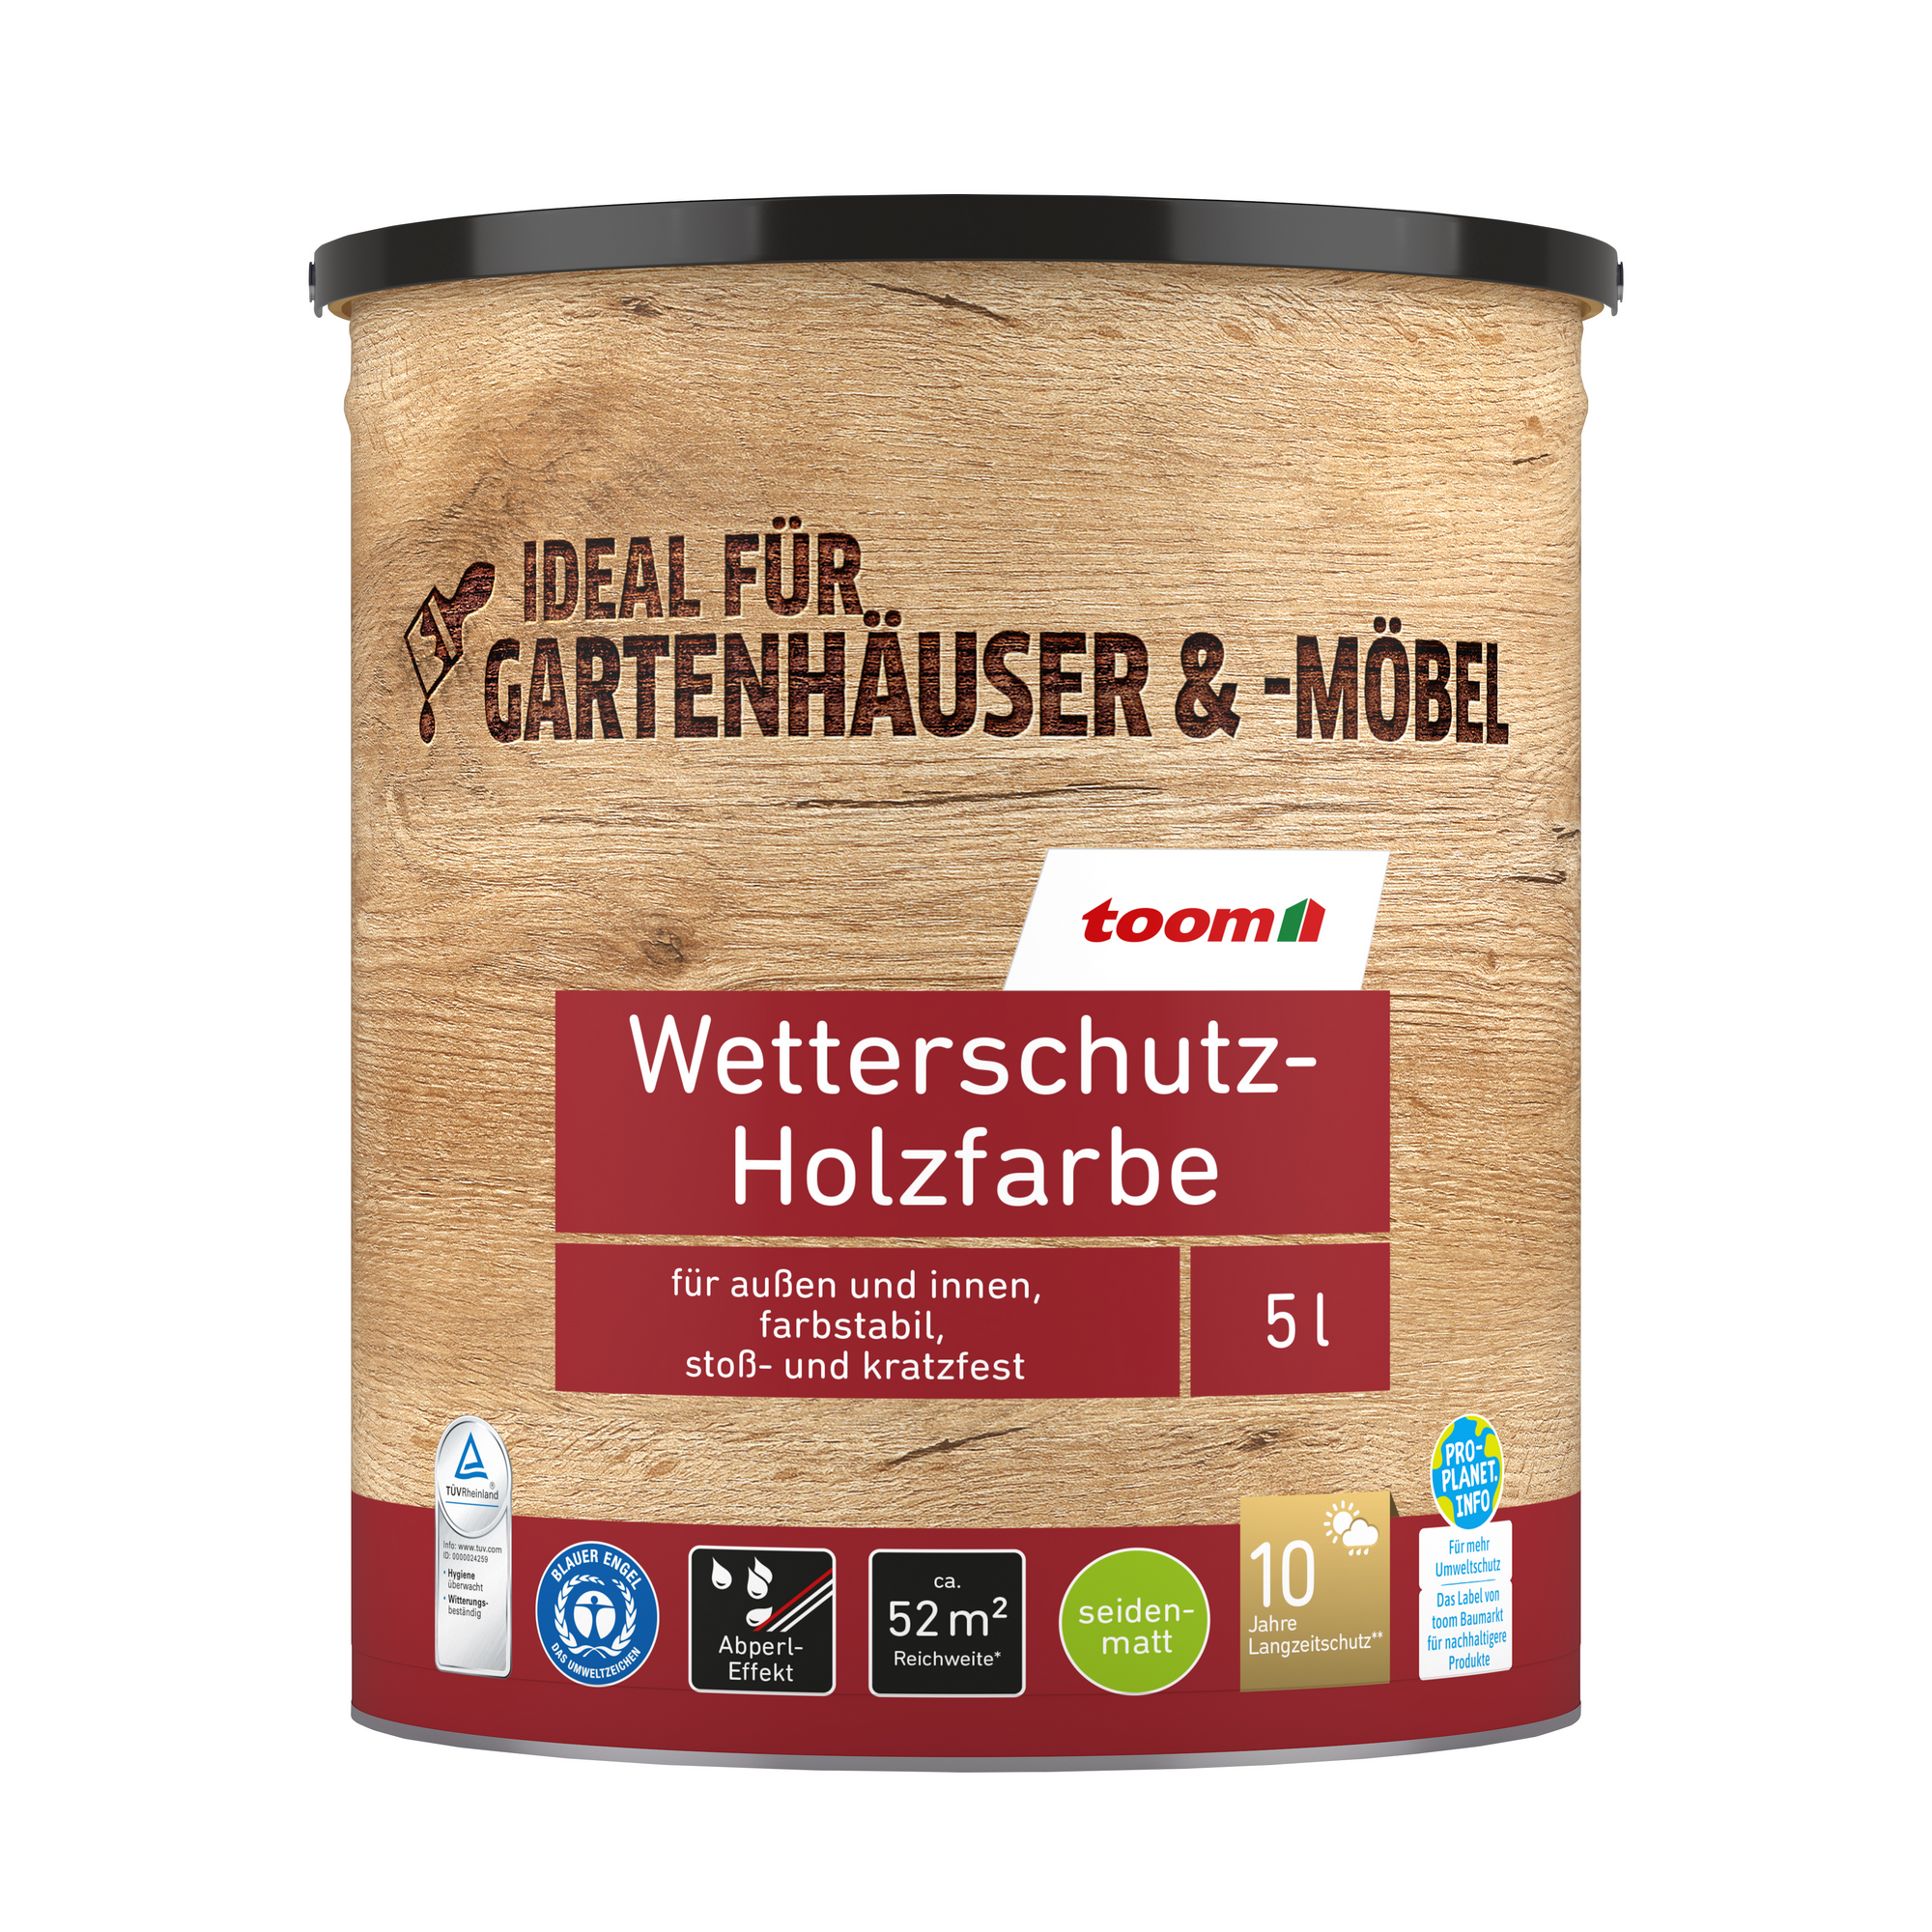 Wetterschutz-Holzfarbe silberfarben 5 l + product picture